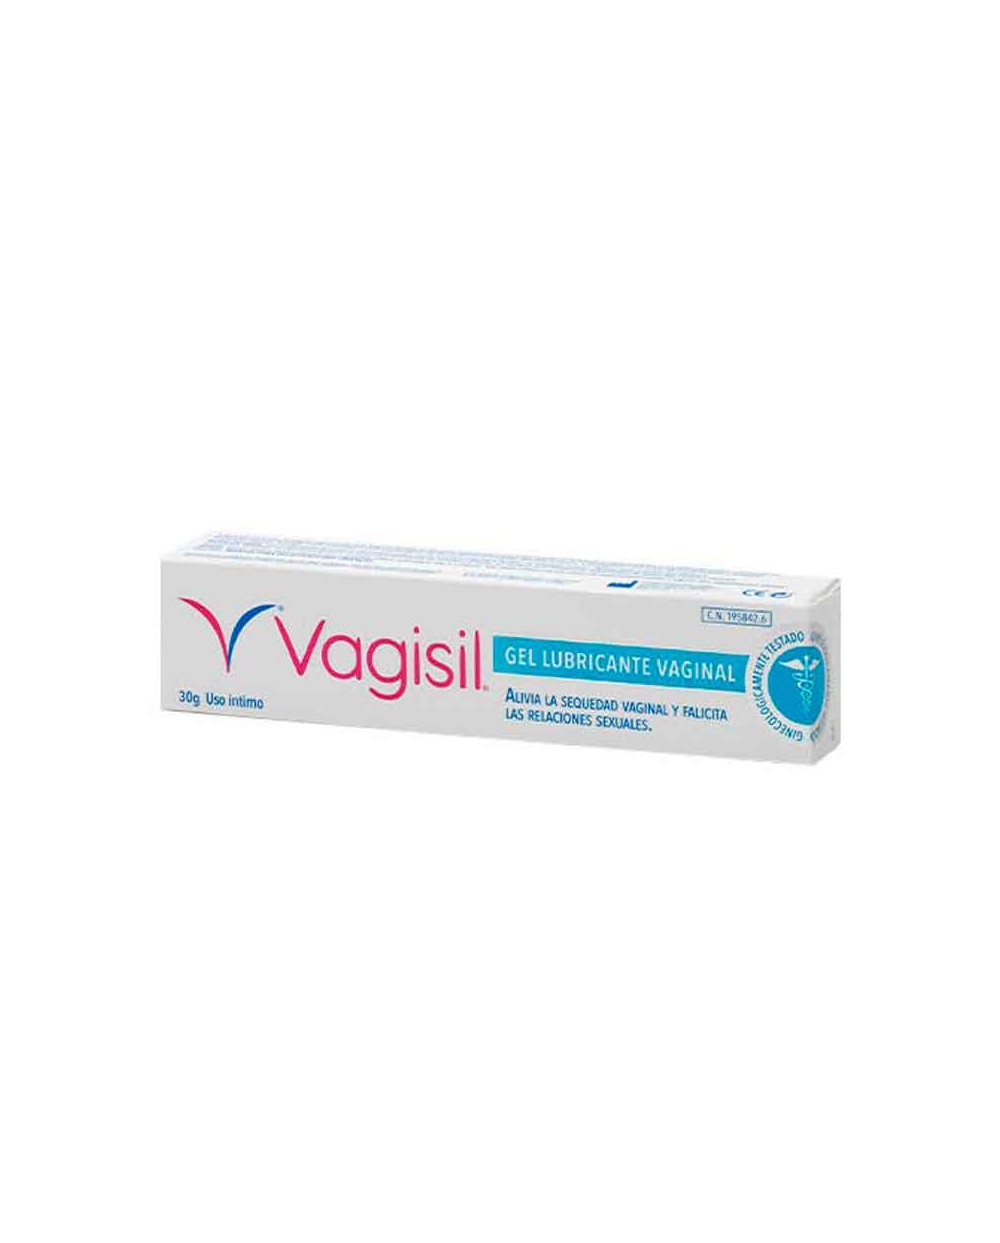 Vagisil gel lubricante vaginal 30g